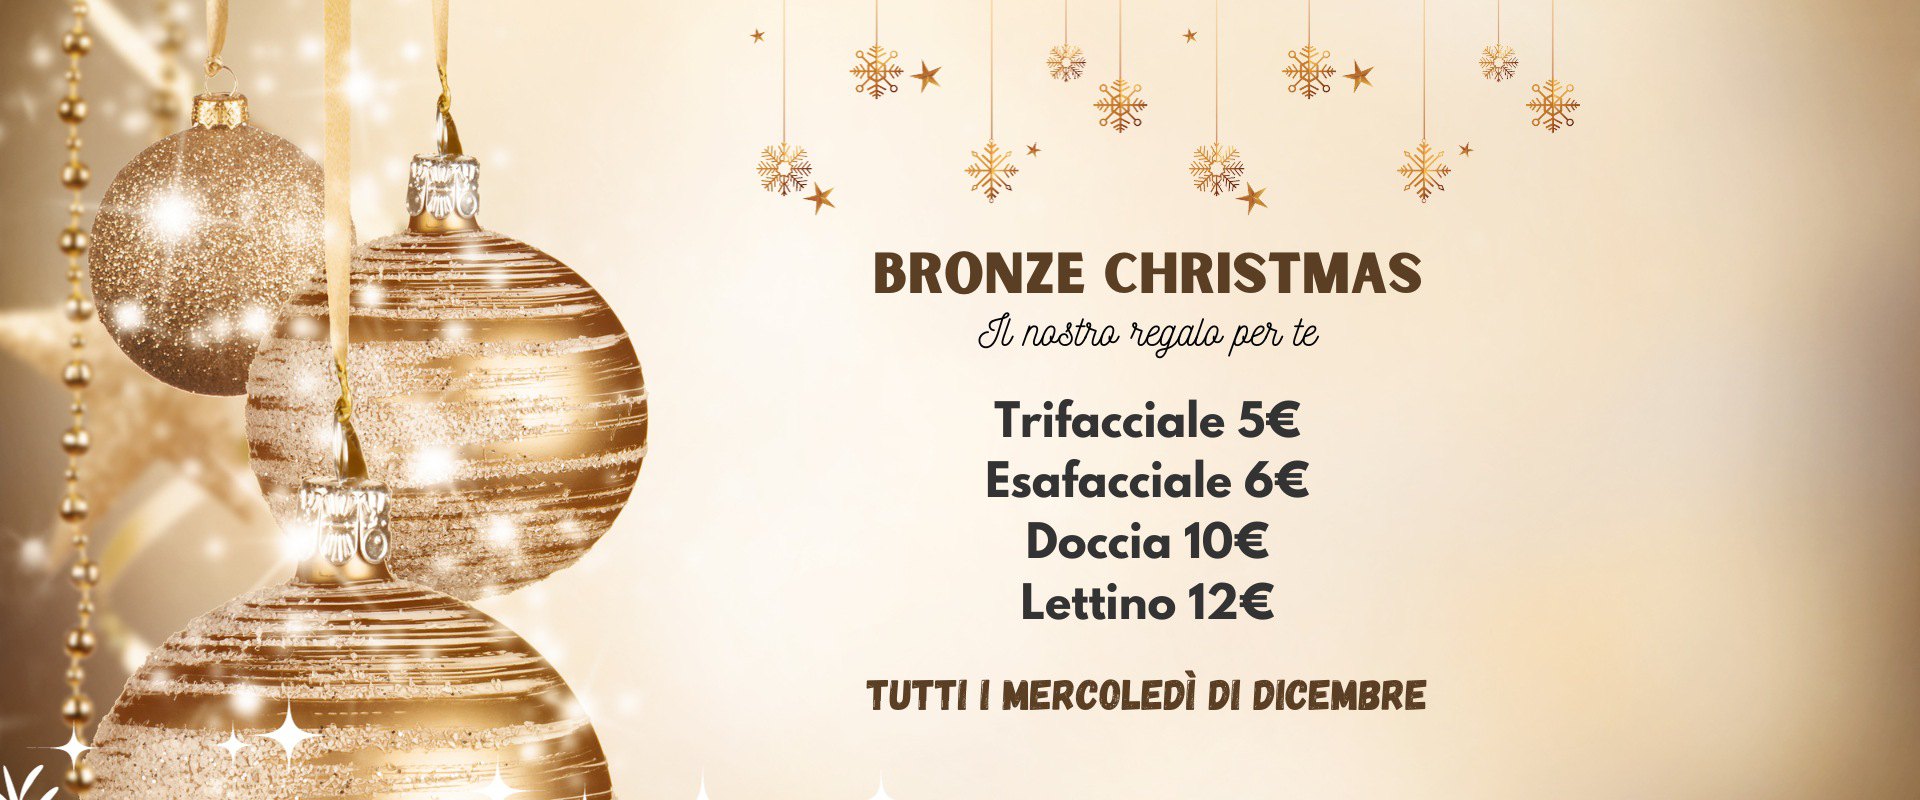 Bronze Christmas